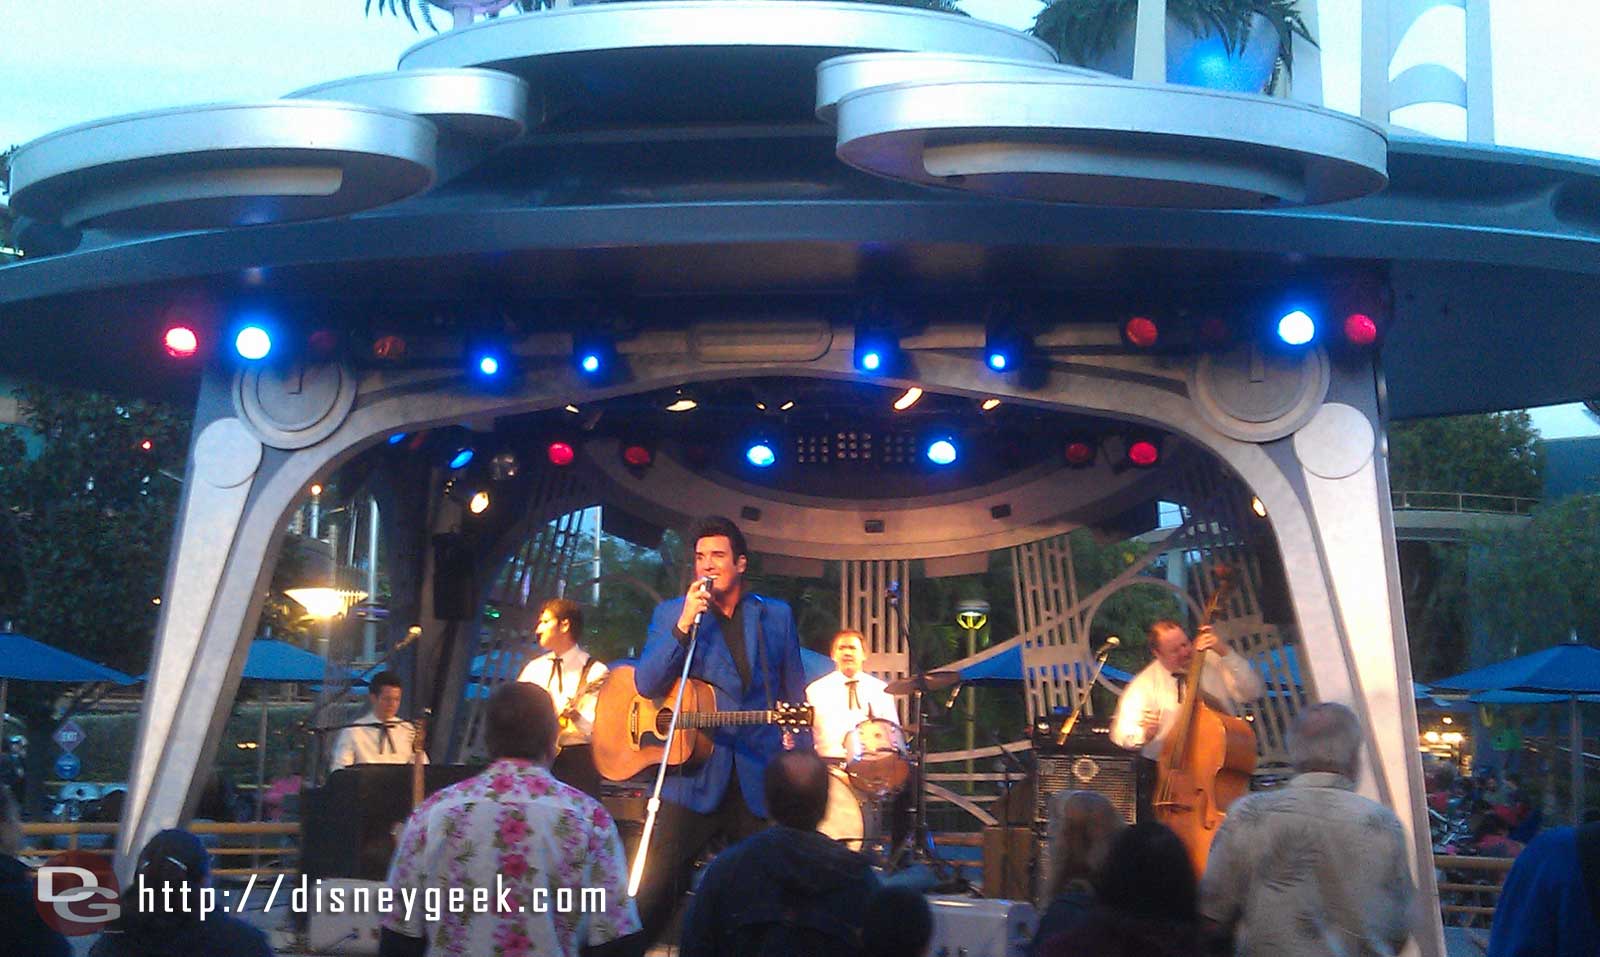 Elvis Scot Bruce is performing at Tomorrowland Terrace this weekend